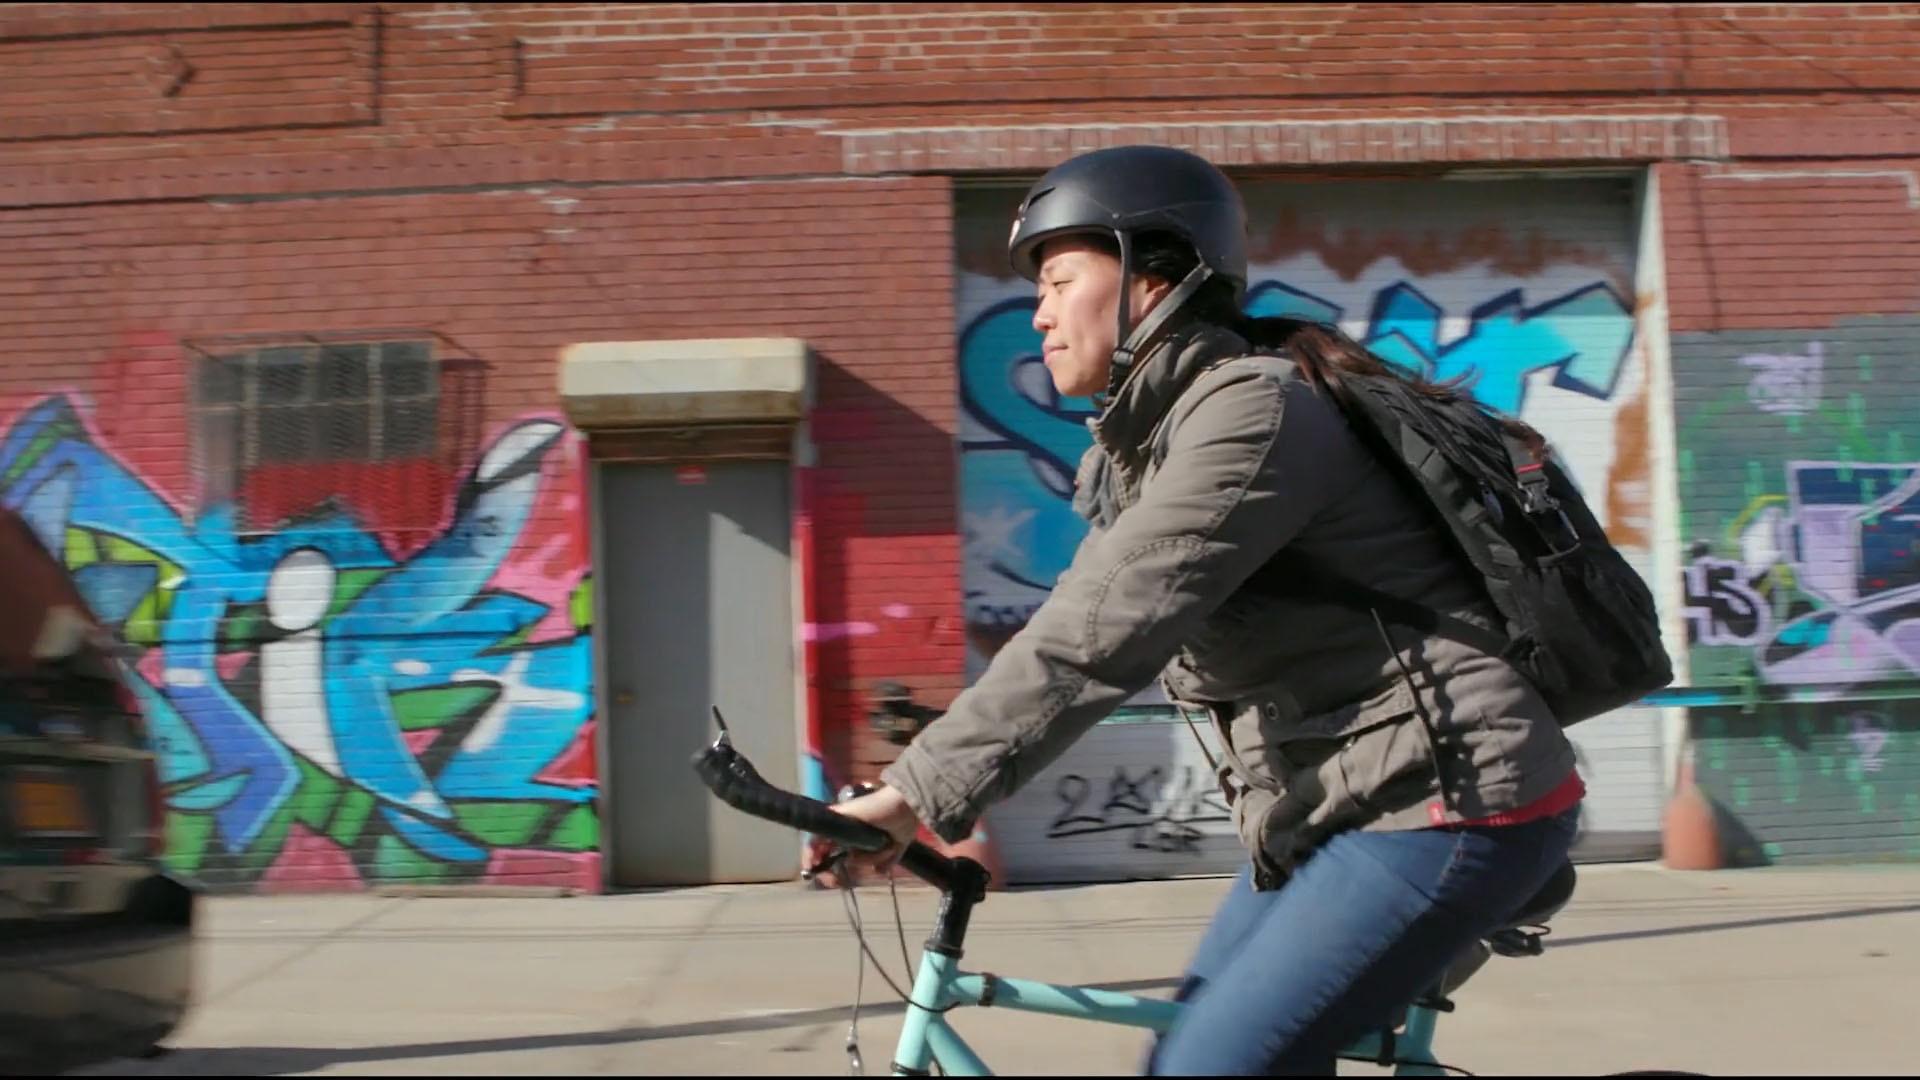 Kyung Jeon-Miranda rides her bike through Williamsburg, Brooklyn.